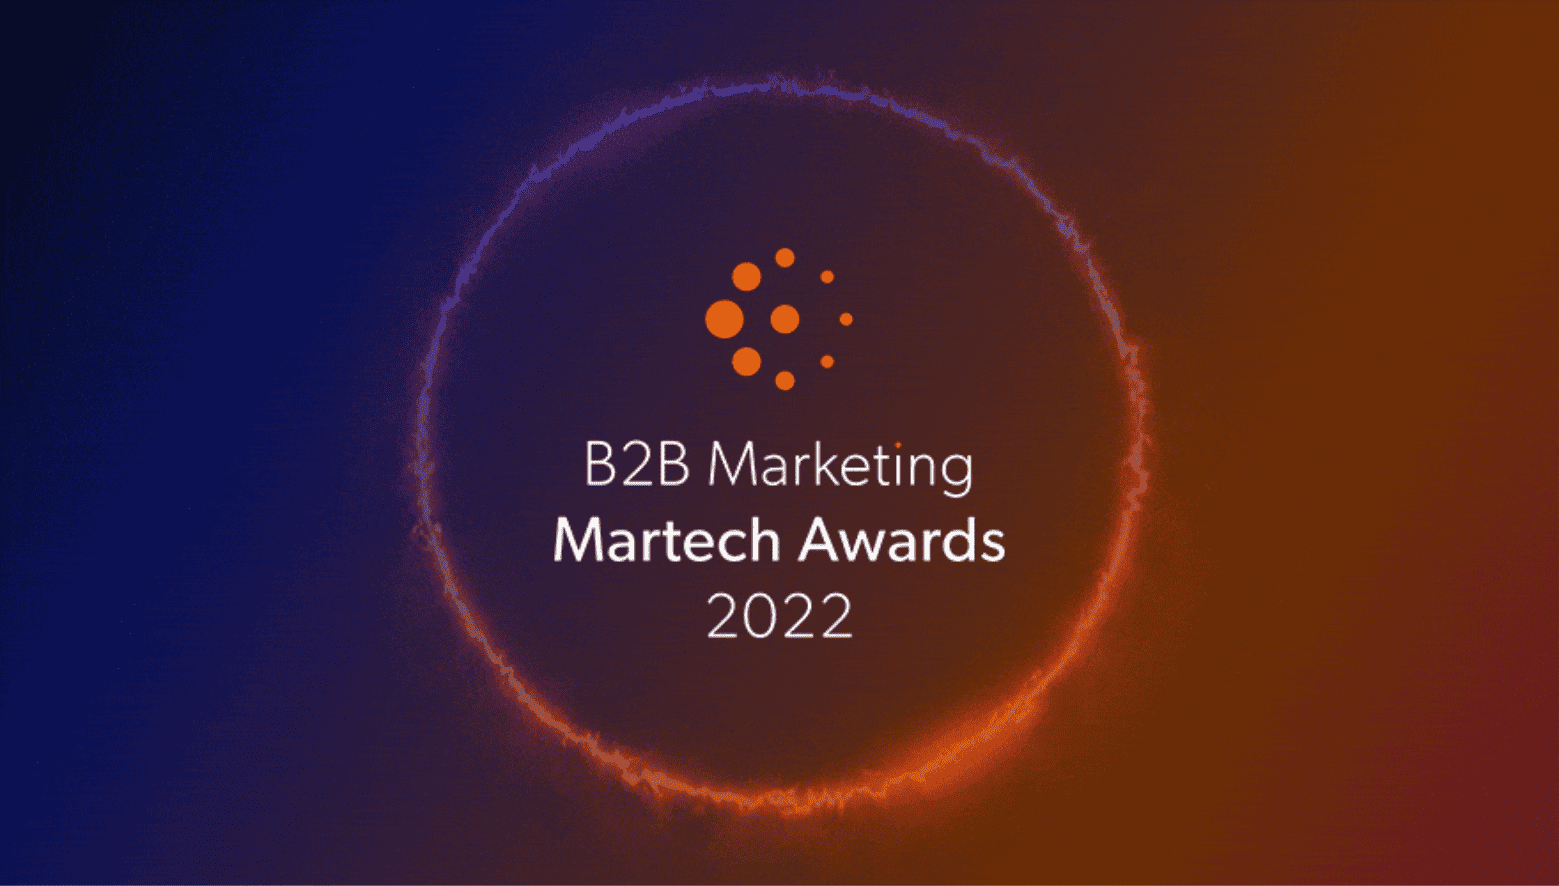 Lead Forensics leads the B2B Marketing Martech Awards 2022 shortlist